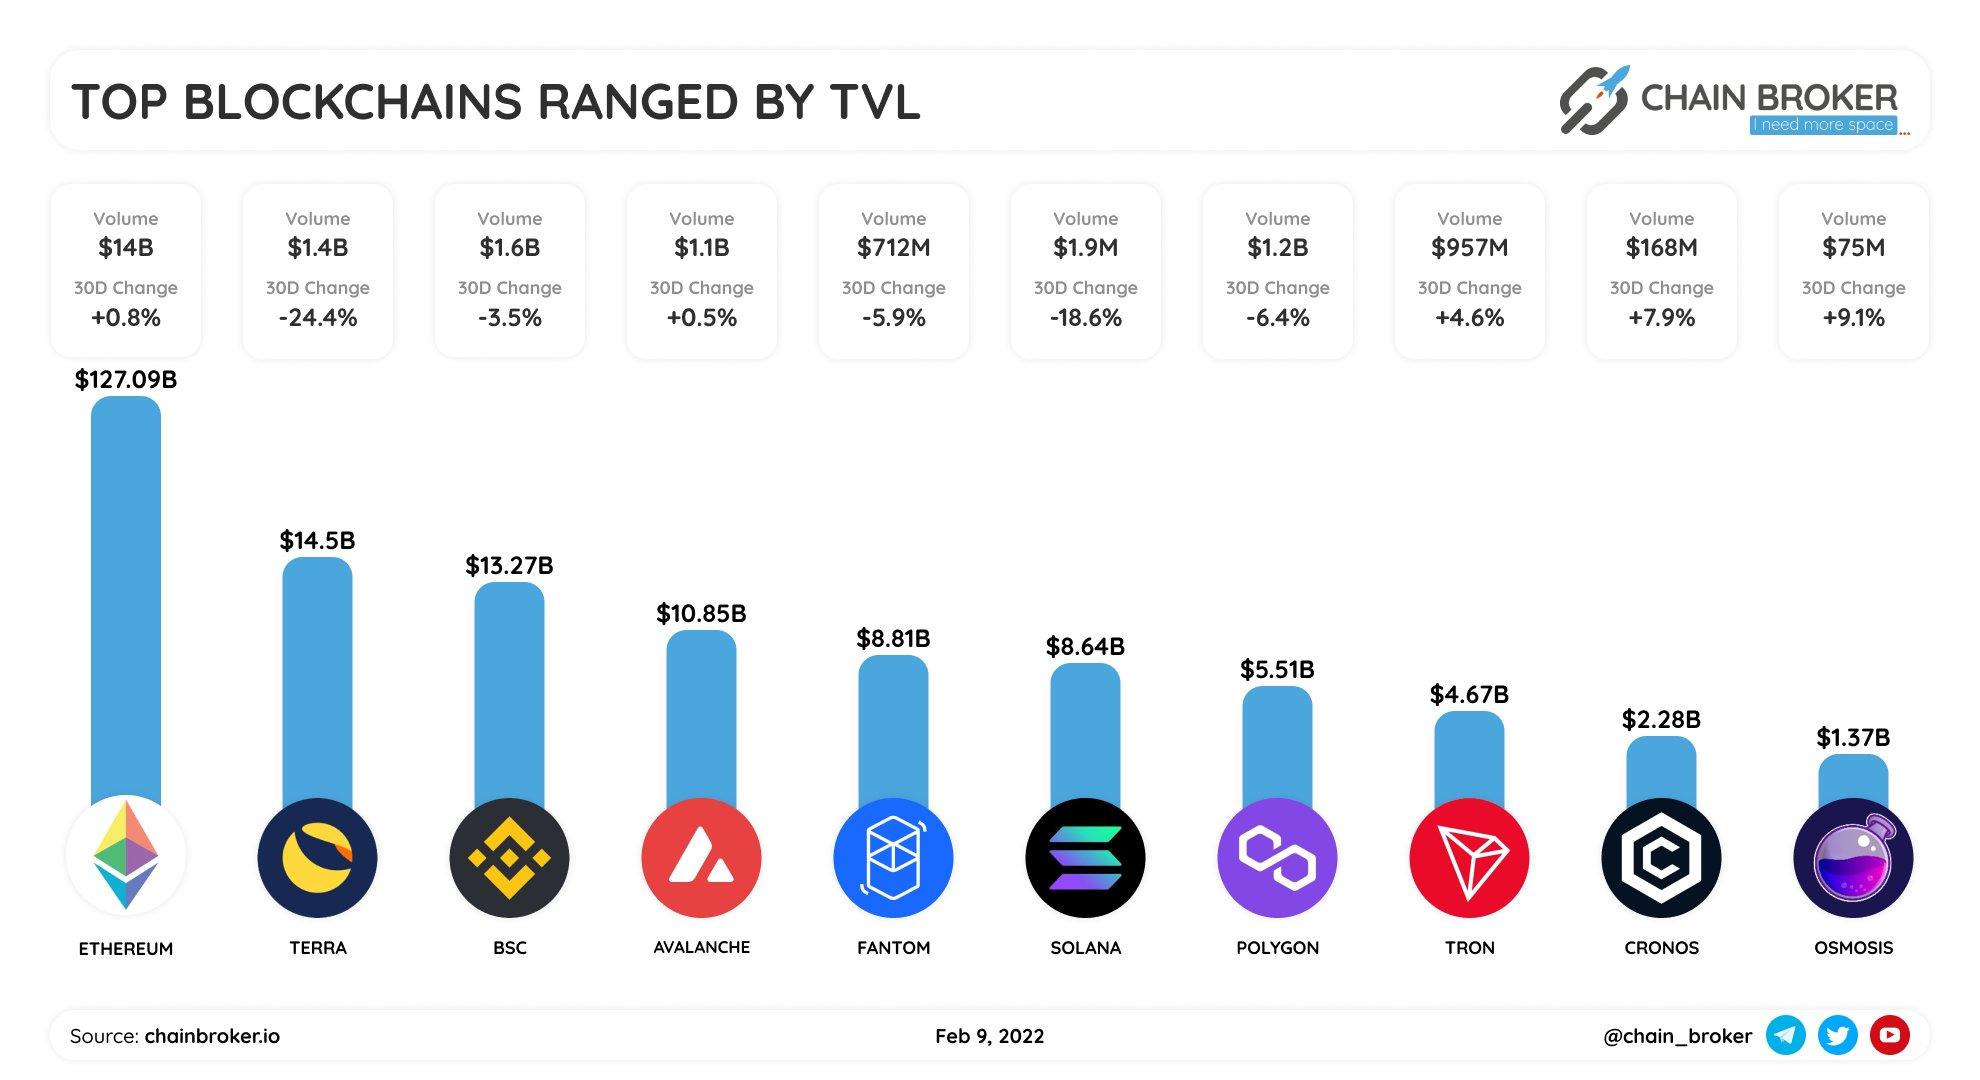 Top blockchains ranged by TVL